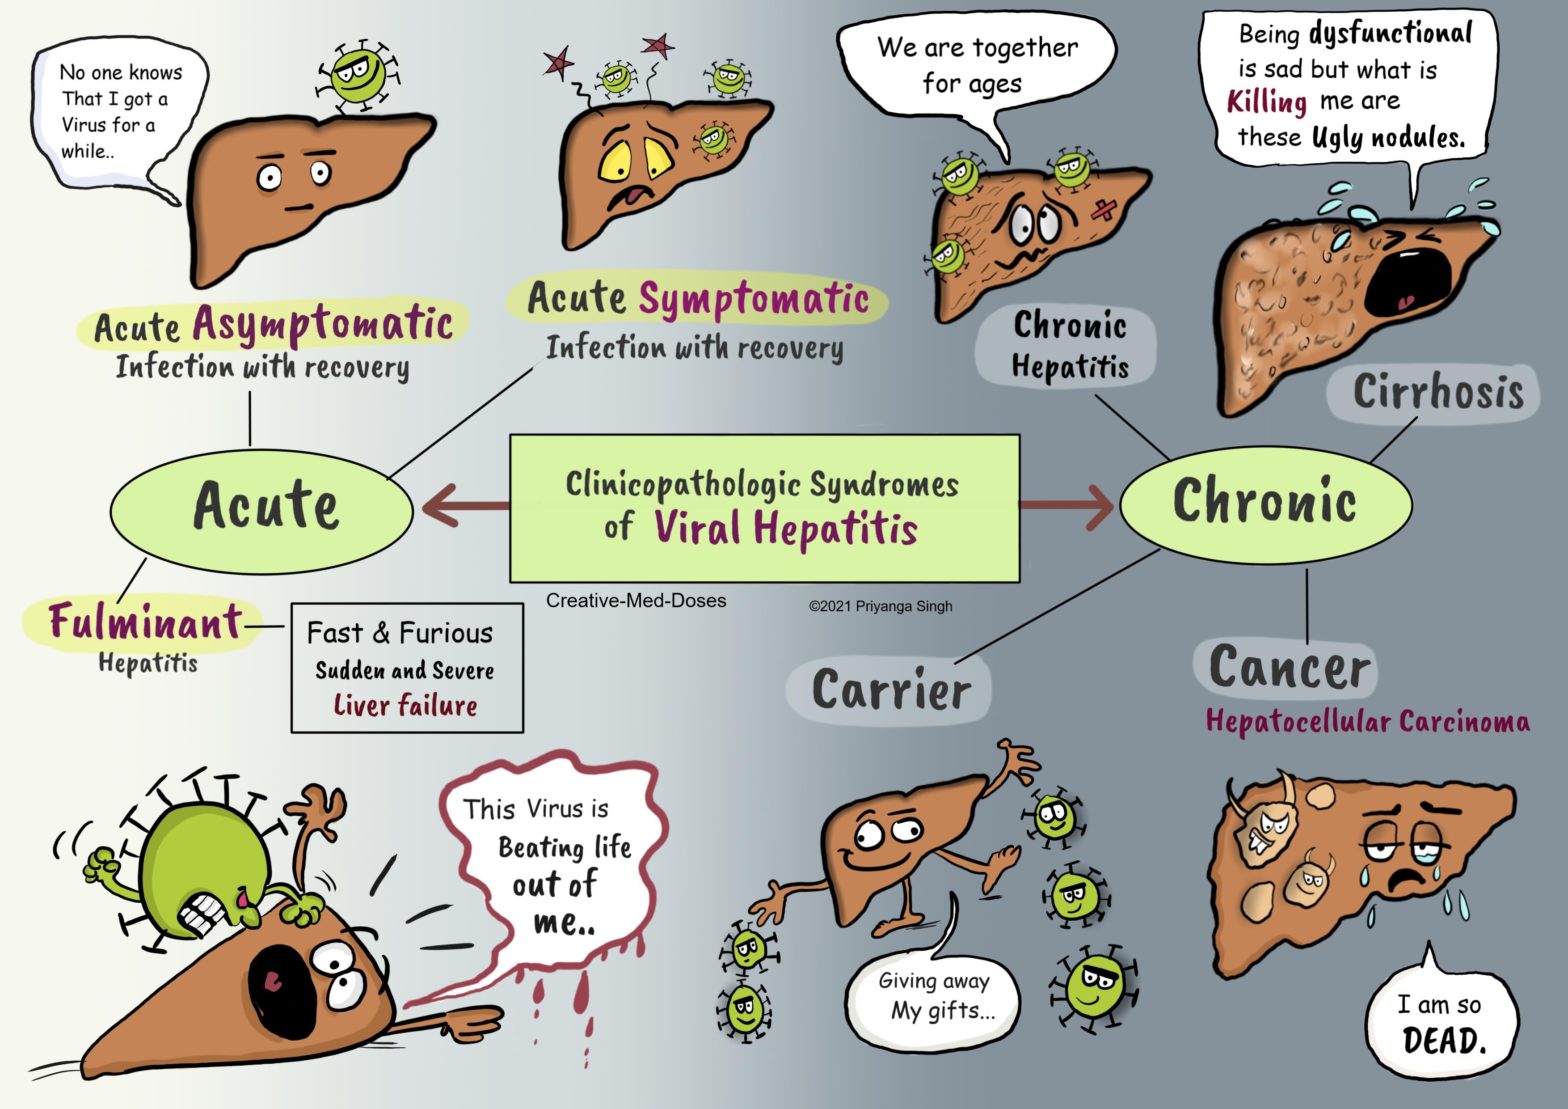 Clinicopathologic Syndromes of Viral Hepatitis